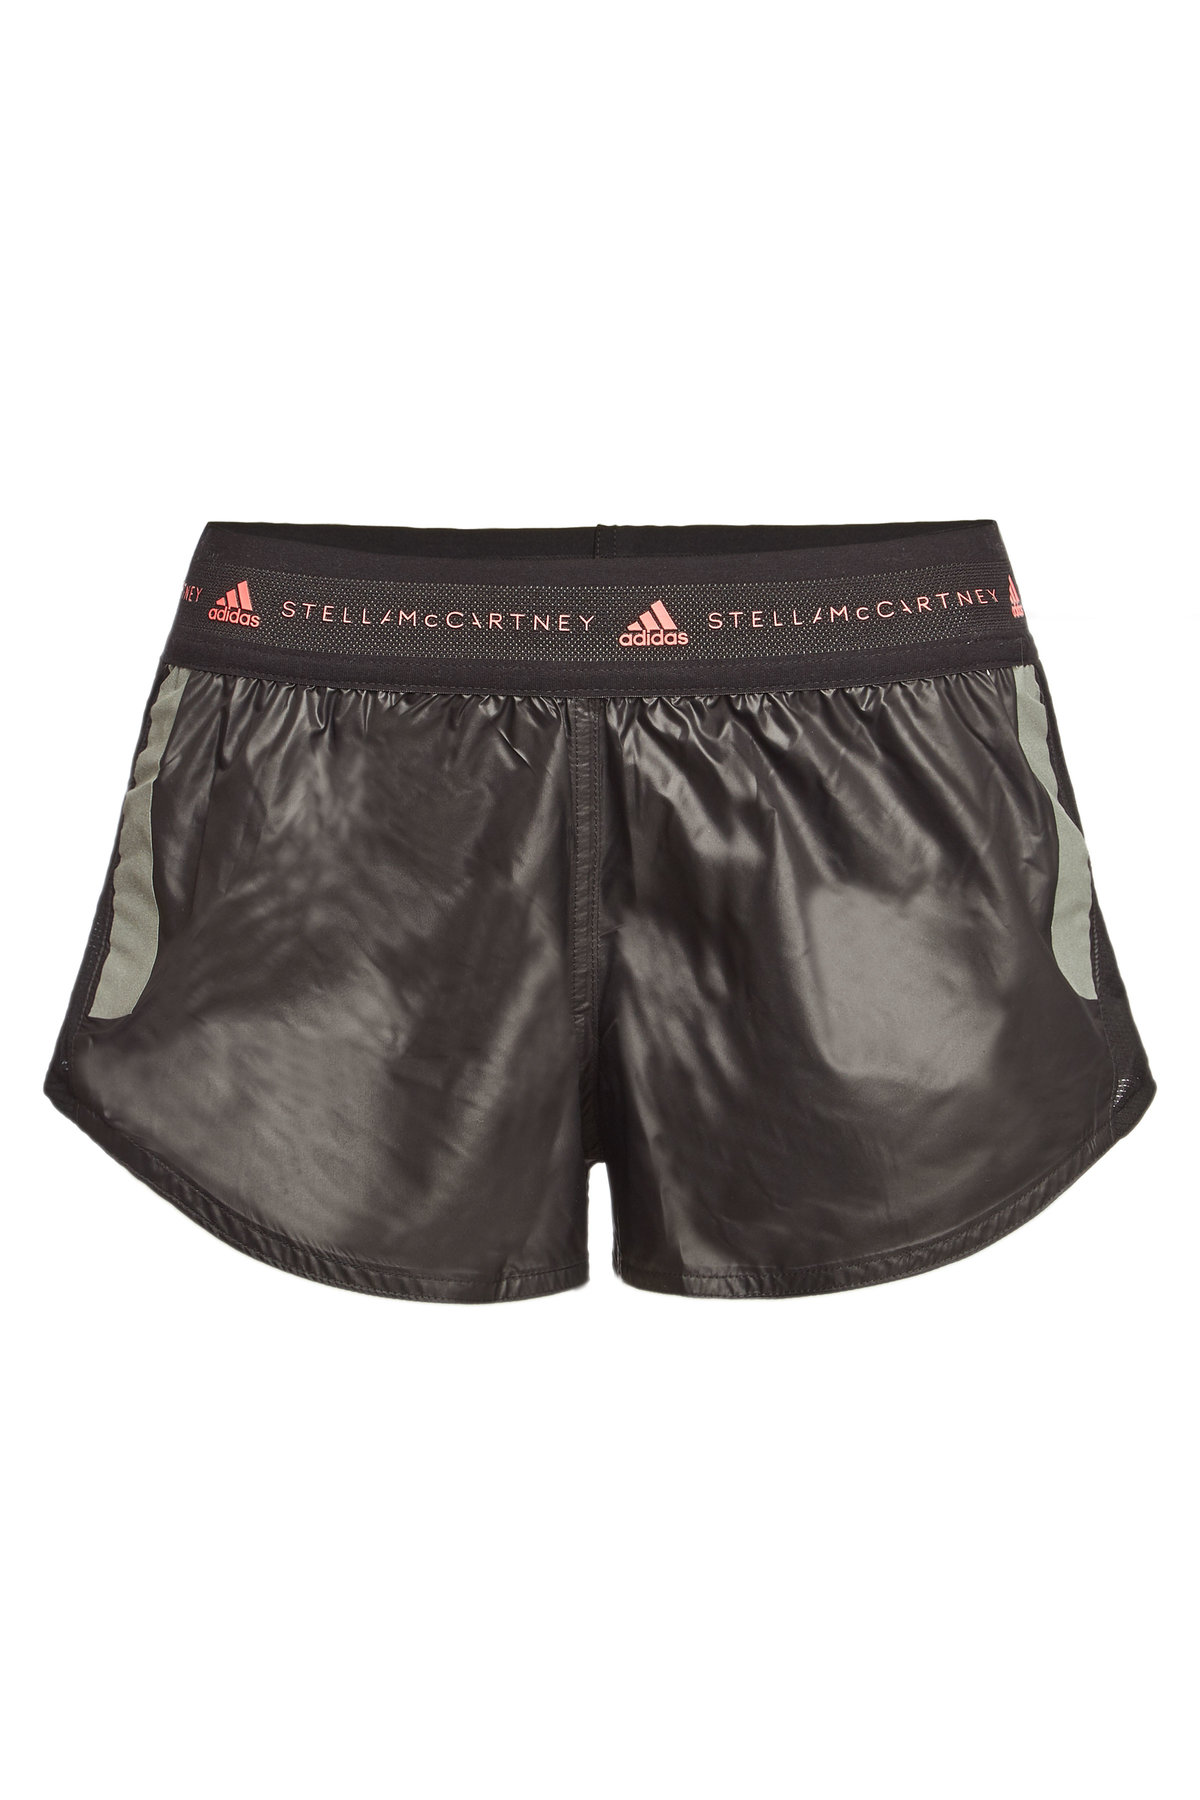 stella mccartney adidas running shorts